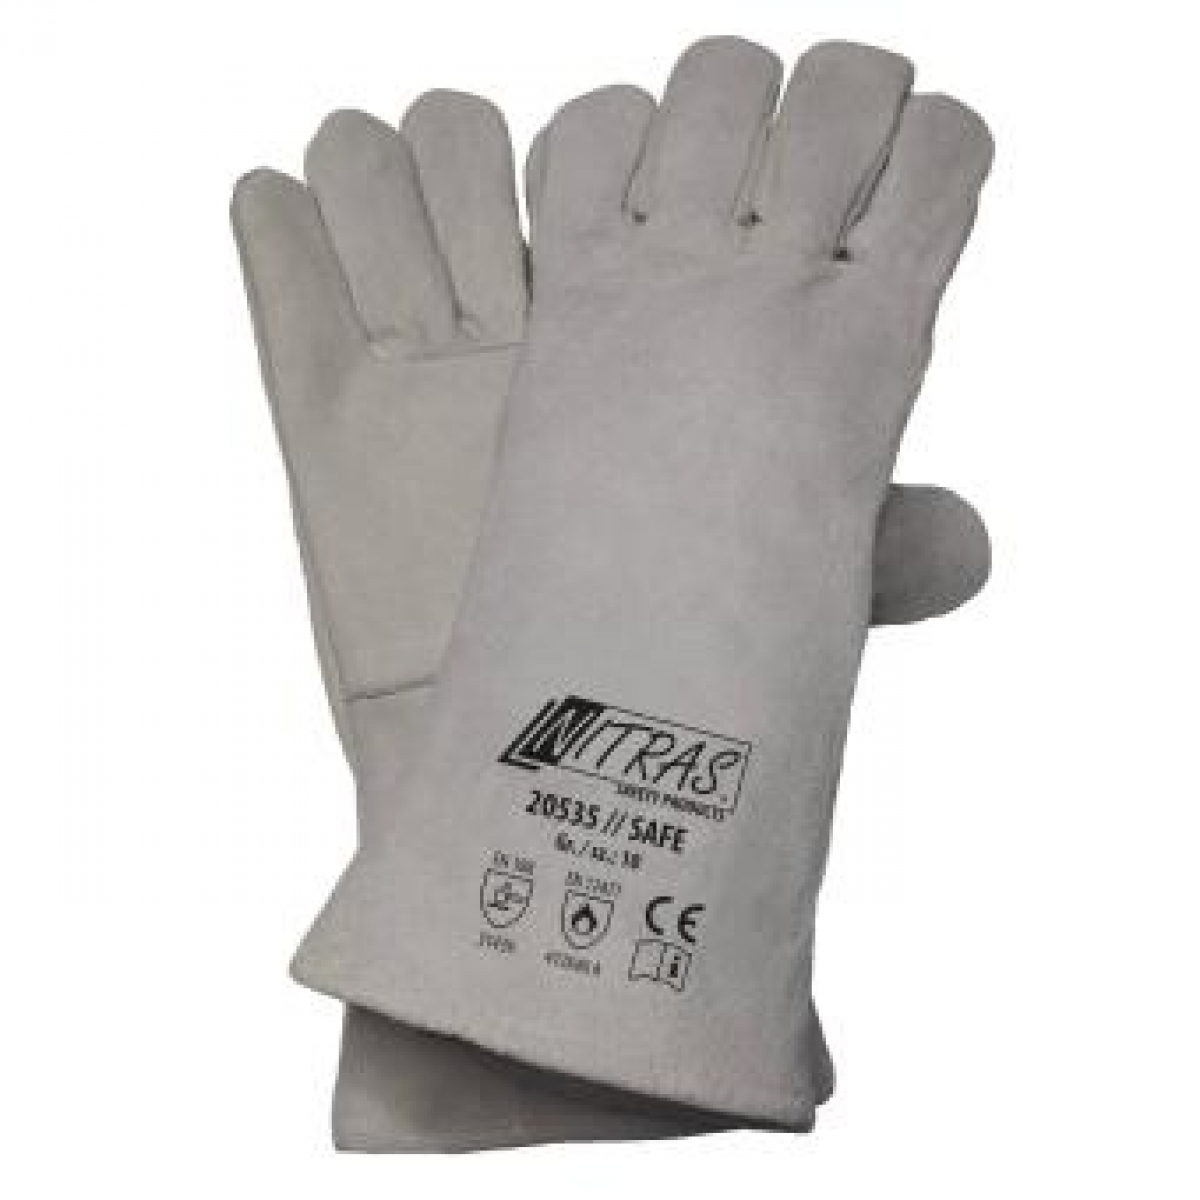 NITRAS SAFE, 5-Finger-Schweierhandschuhe (amerikan. Sicherheitsschweier), Spaltleder, grau, VE = 12 Paar